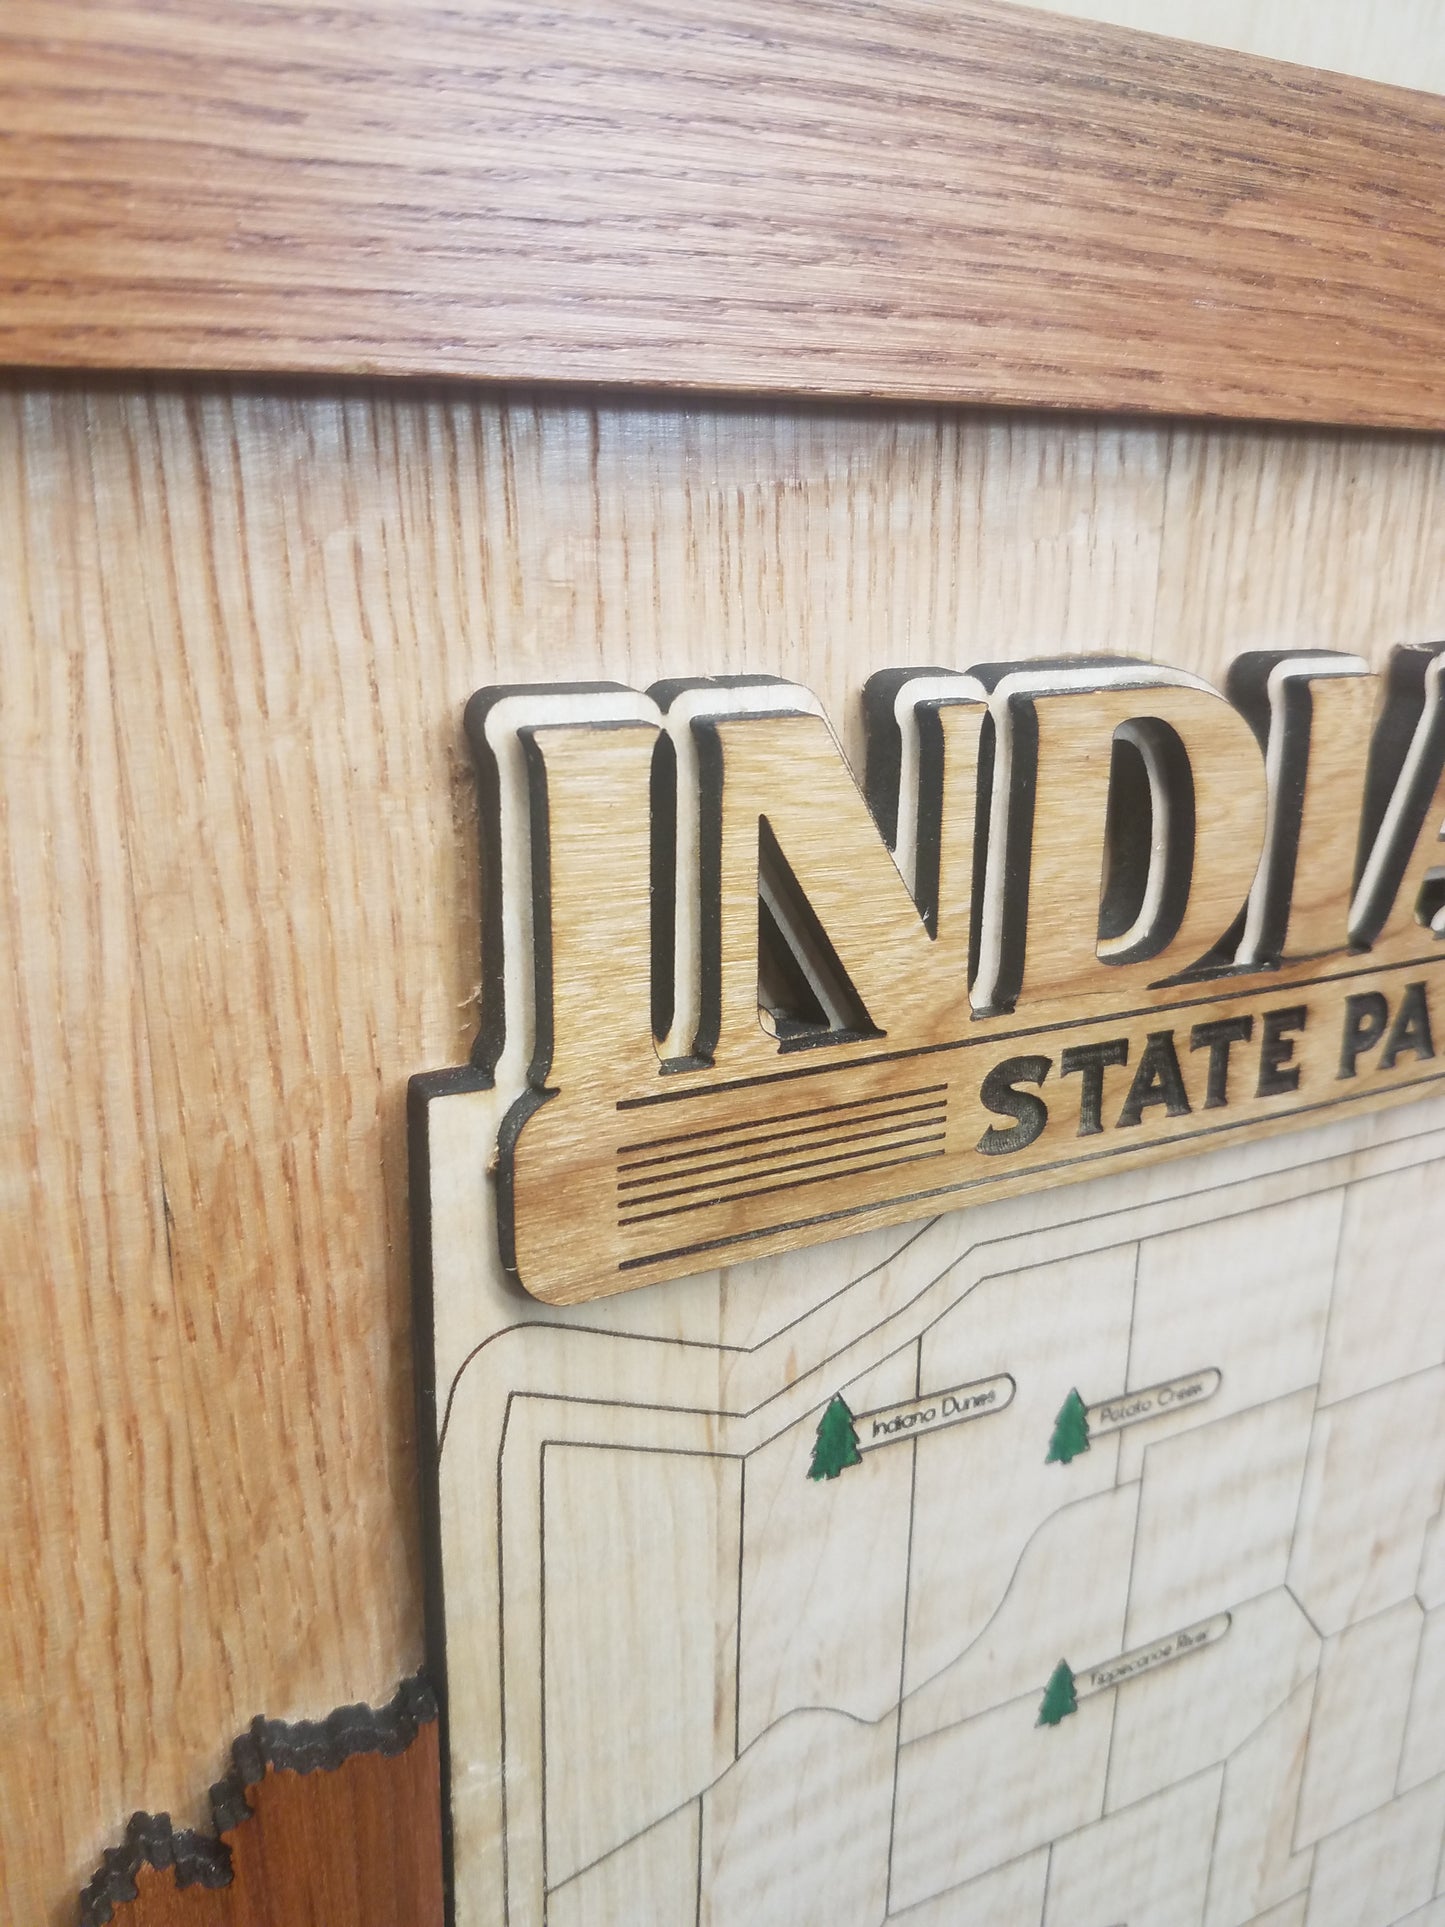 Indiana State Park Explorer Map